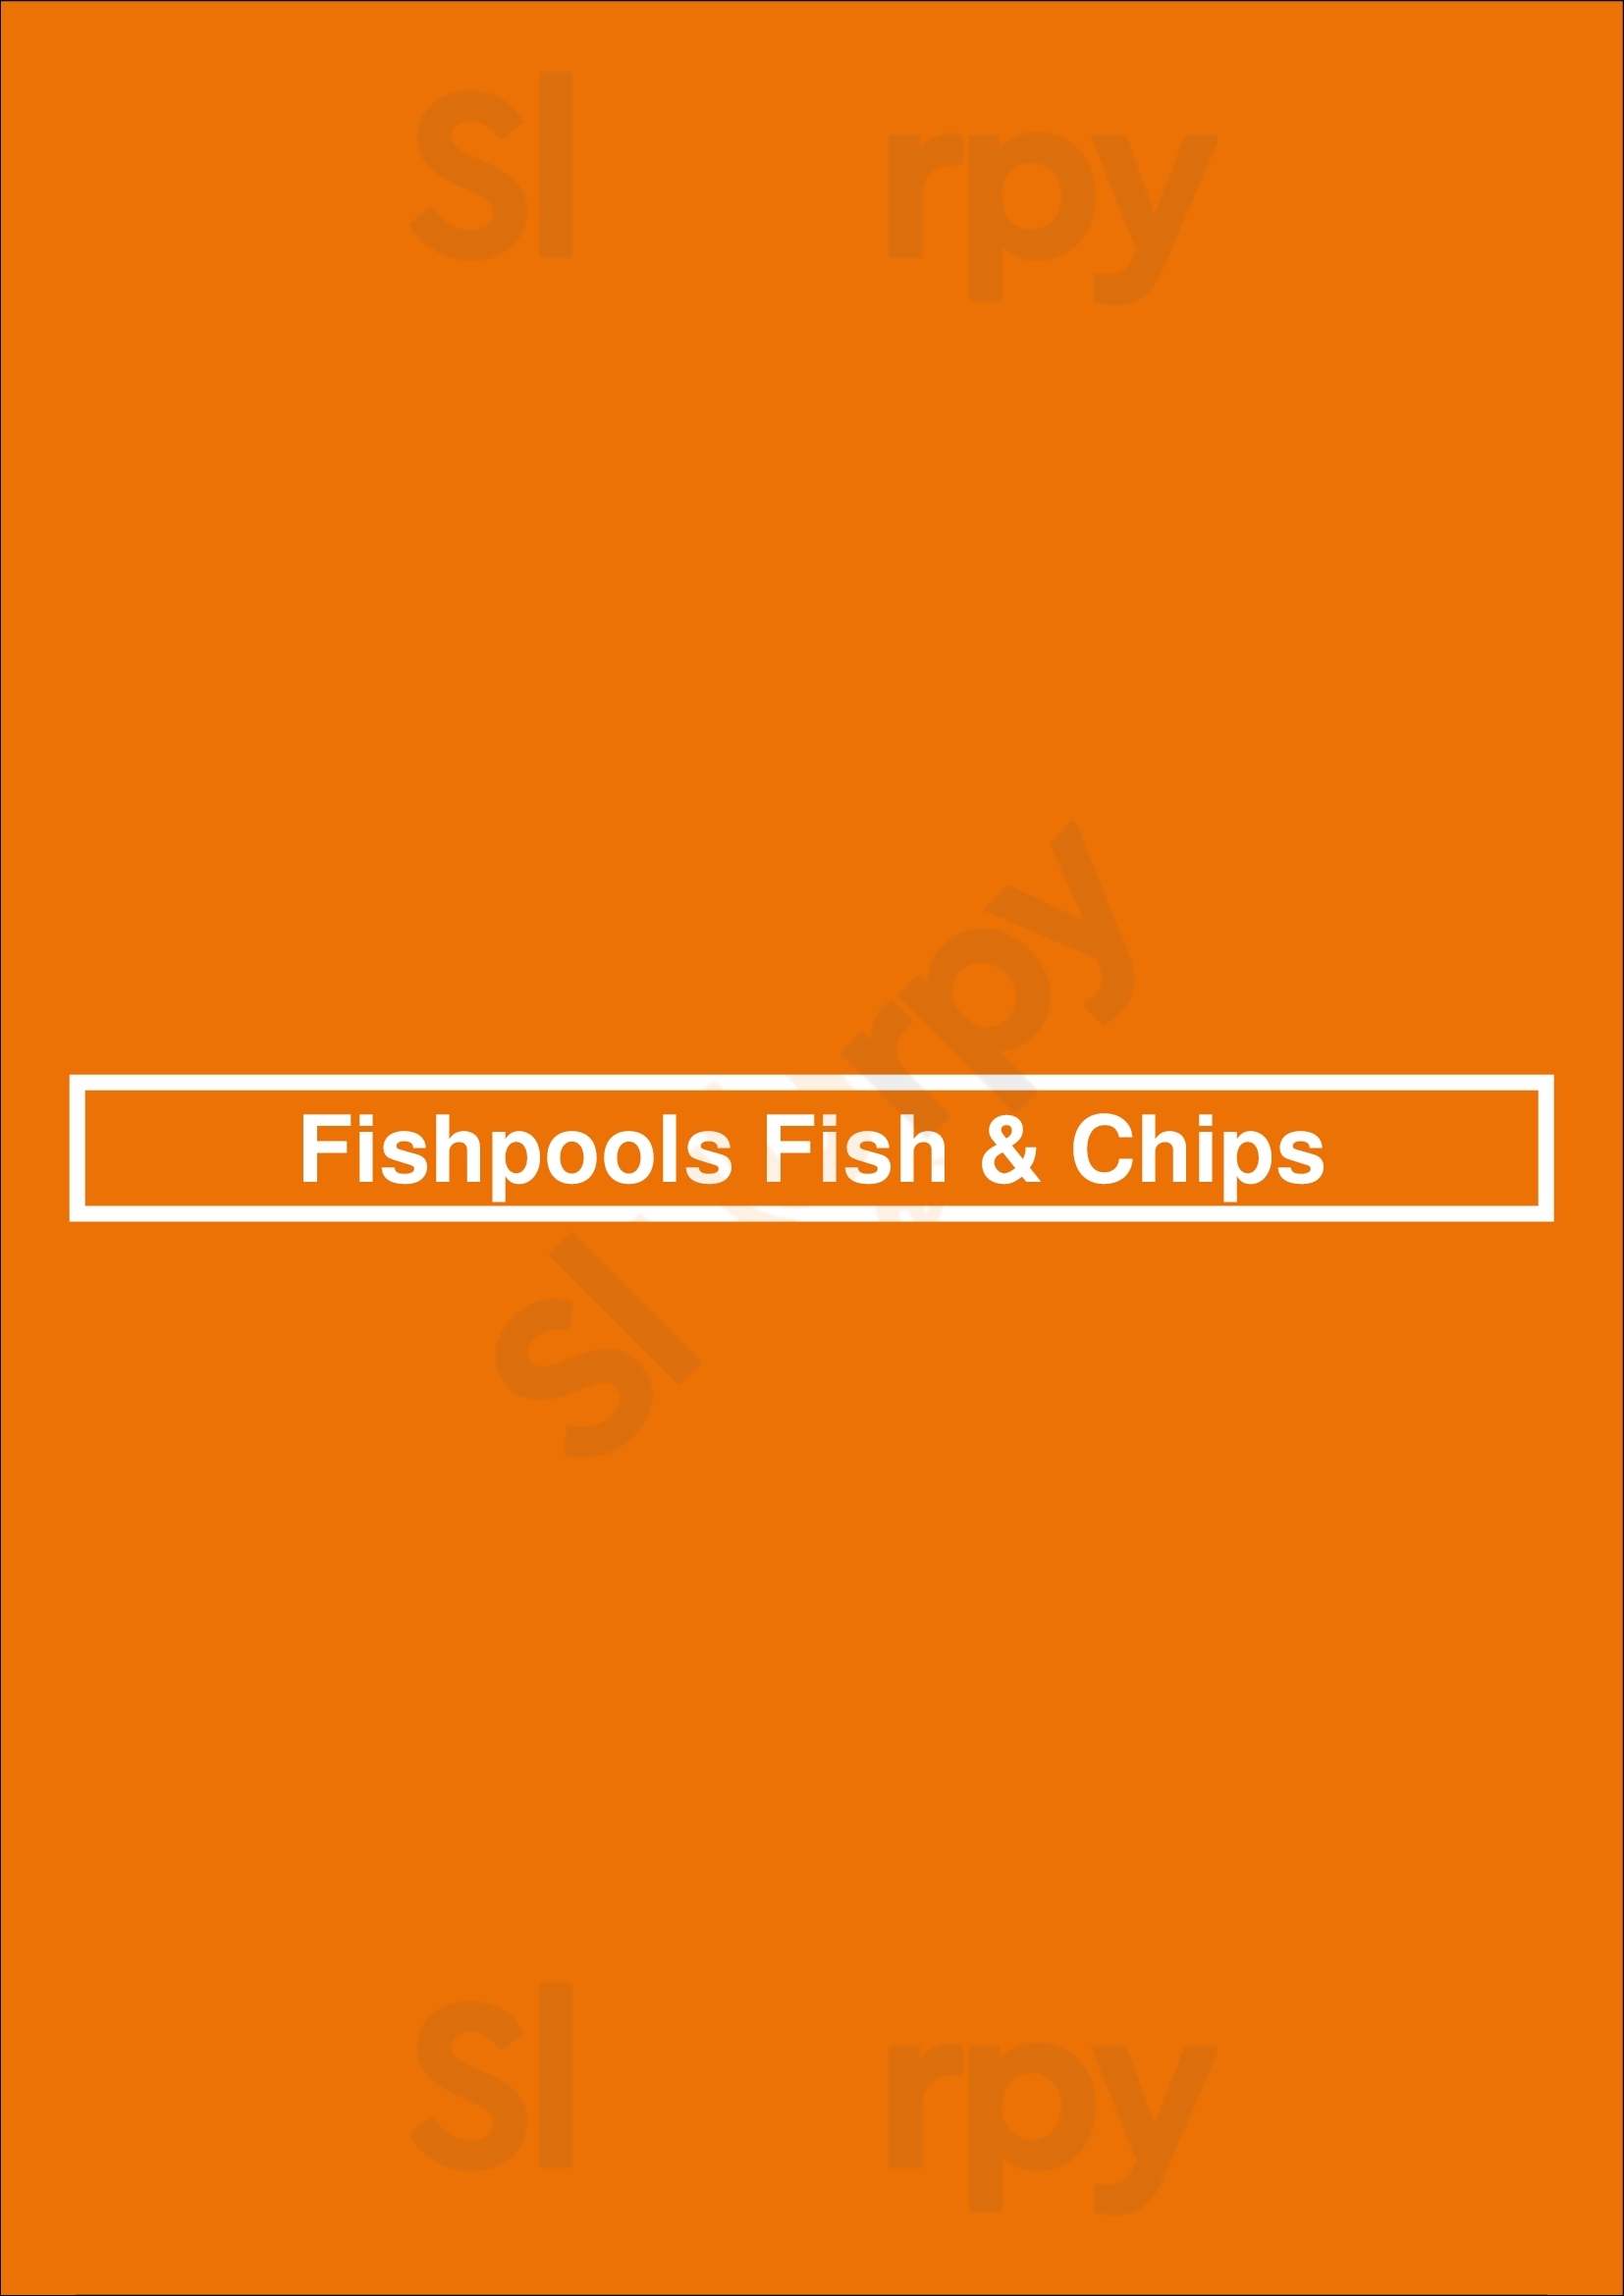 Fishpools Fish & Chips Bury Menu - 1